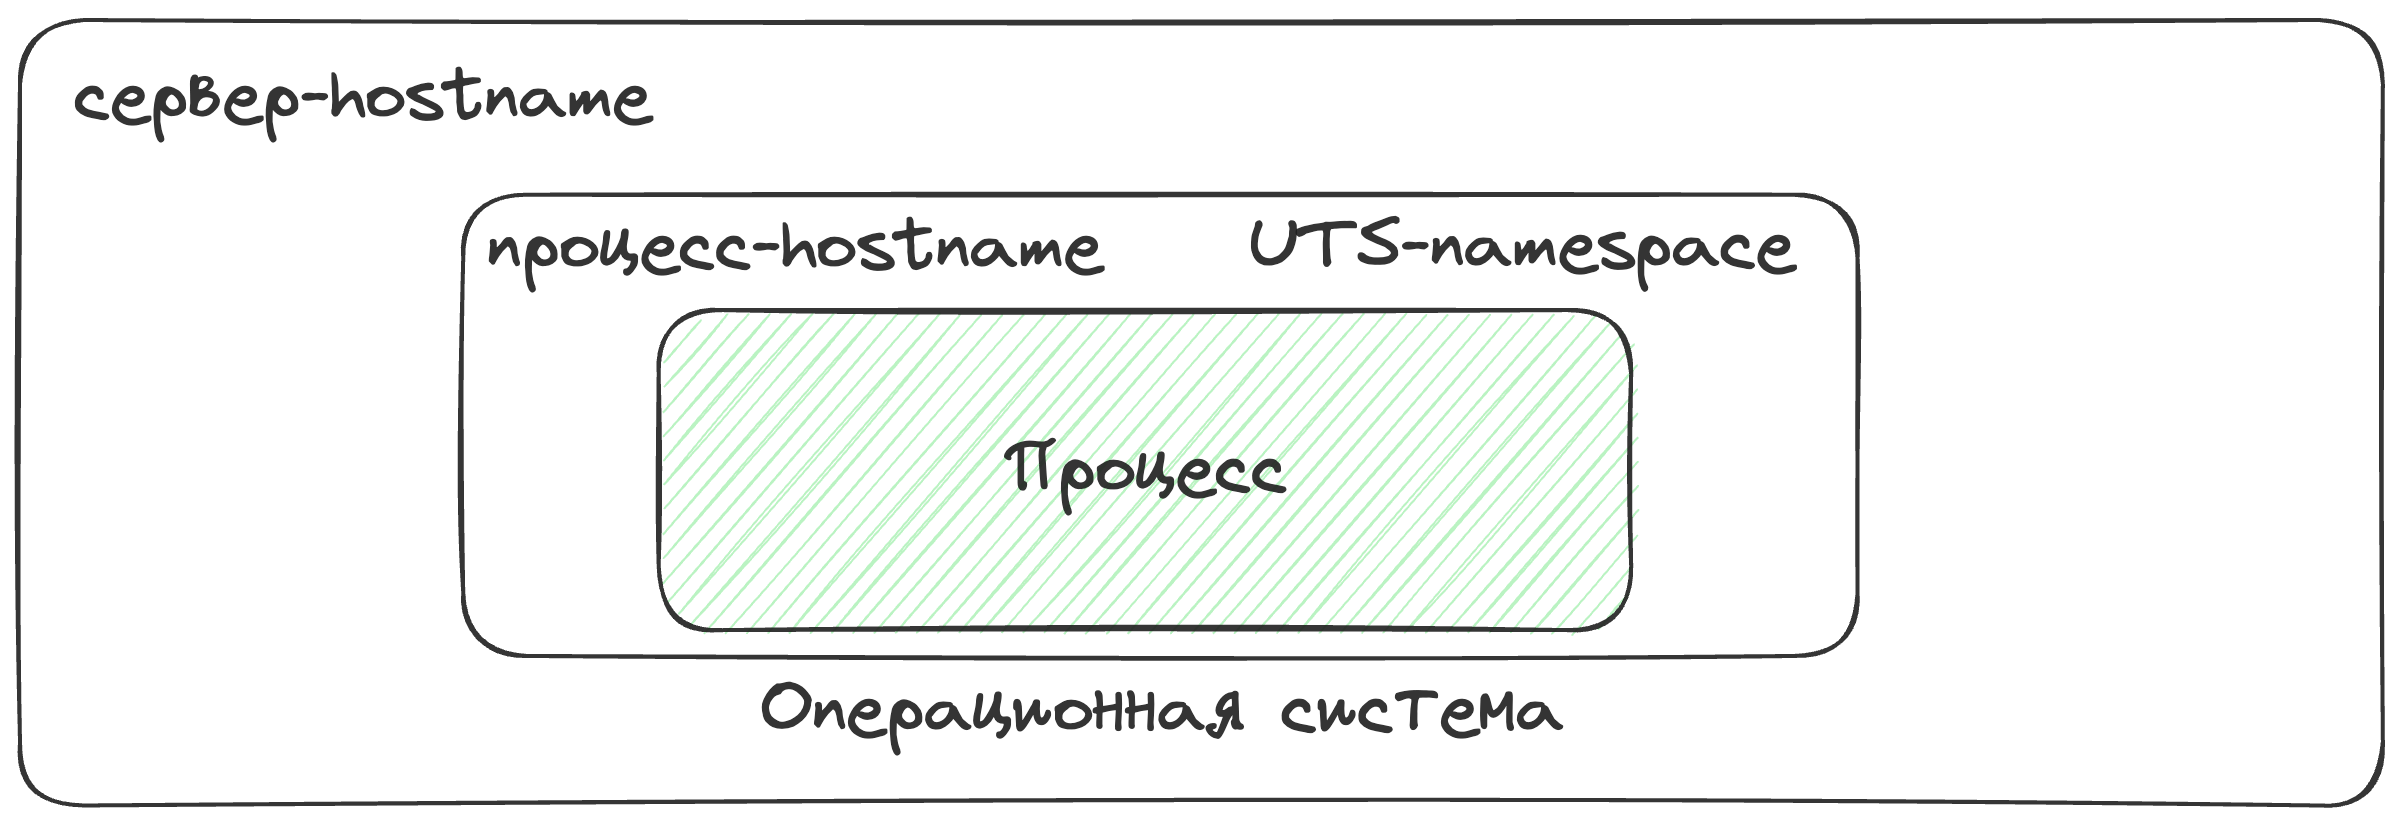 namespace-UTS